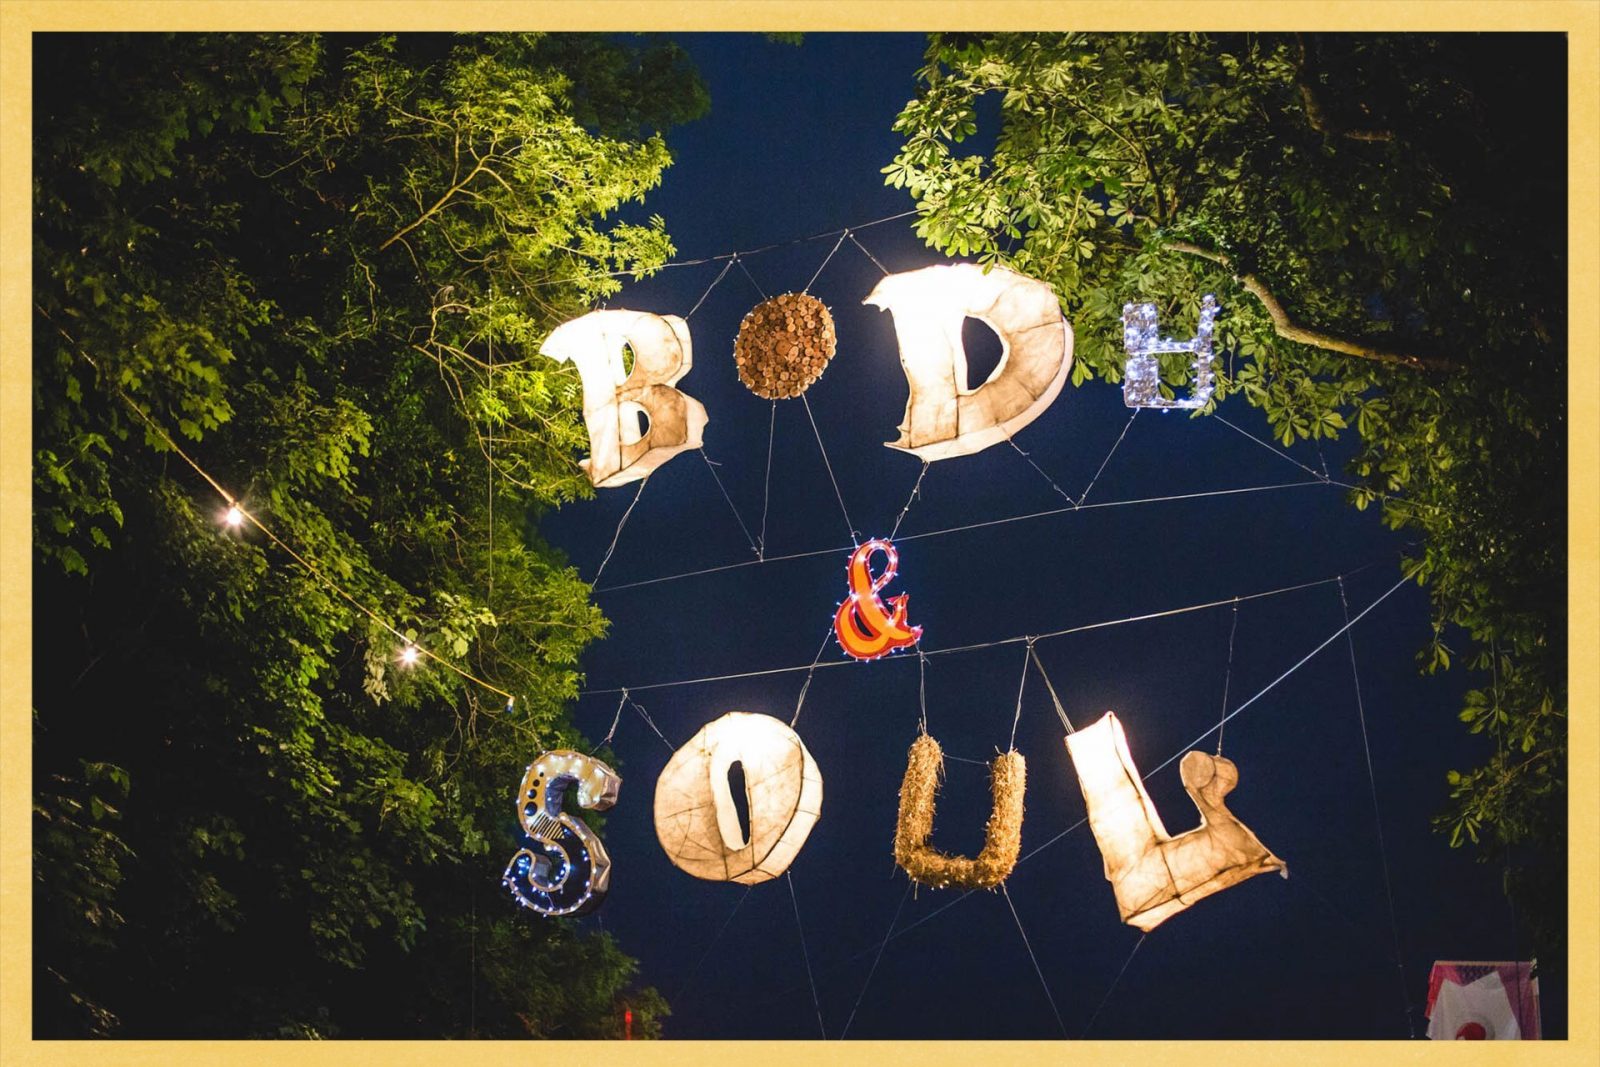 Body&Soul highlights